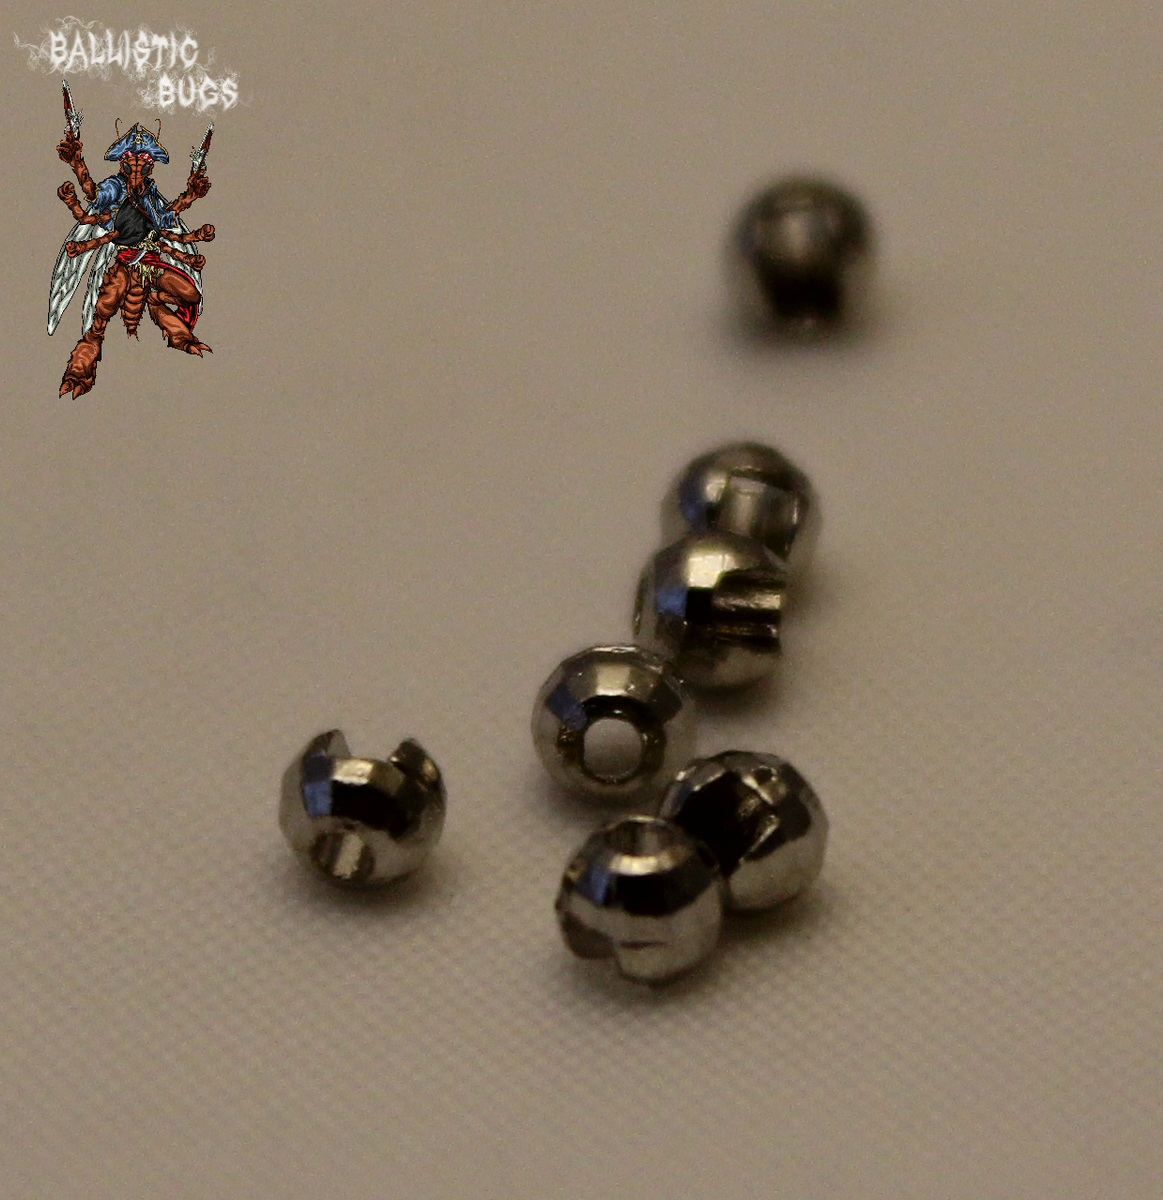 Glass Sandblast Beads - Barlow's Tackle